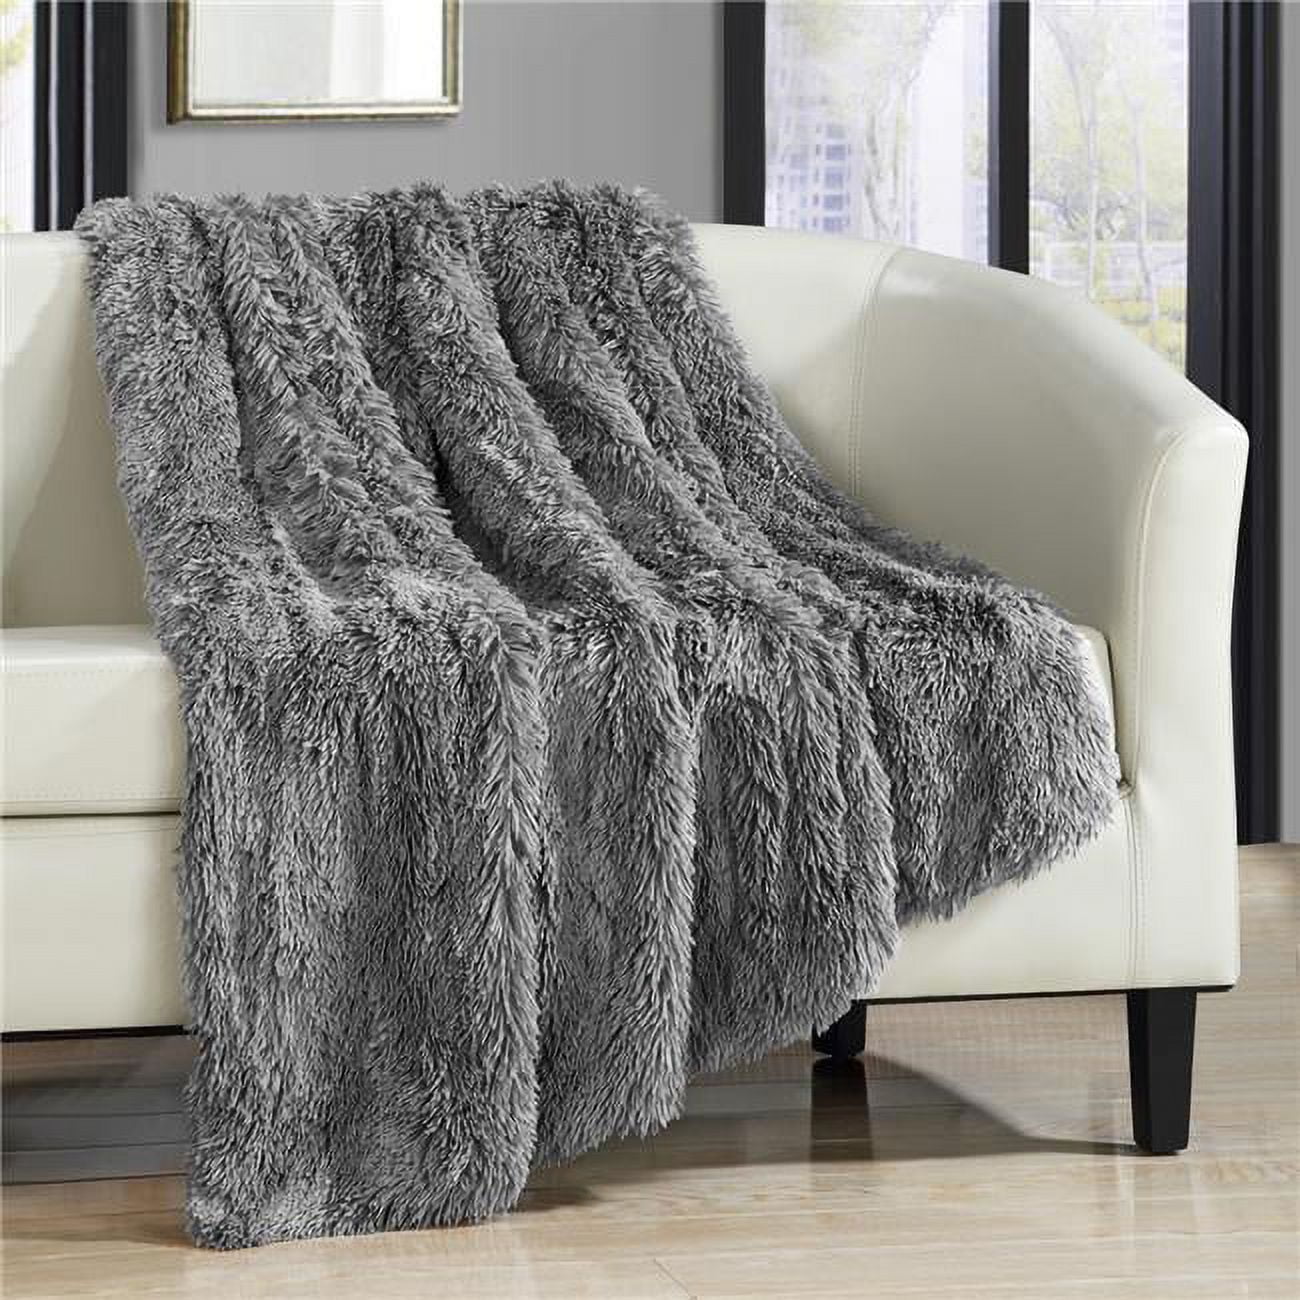 Tb3901-us 50 X 60 In. Anchorage Throw Blanket Cozy Super Soft Ultra Plush Decorative Shaggy, Silver